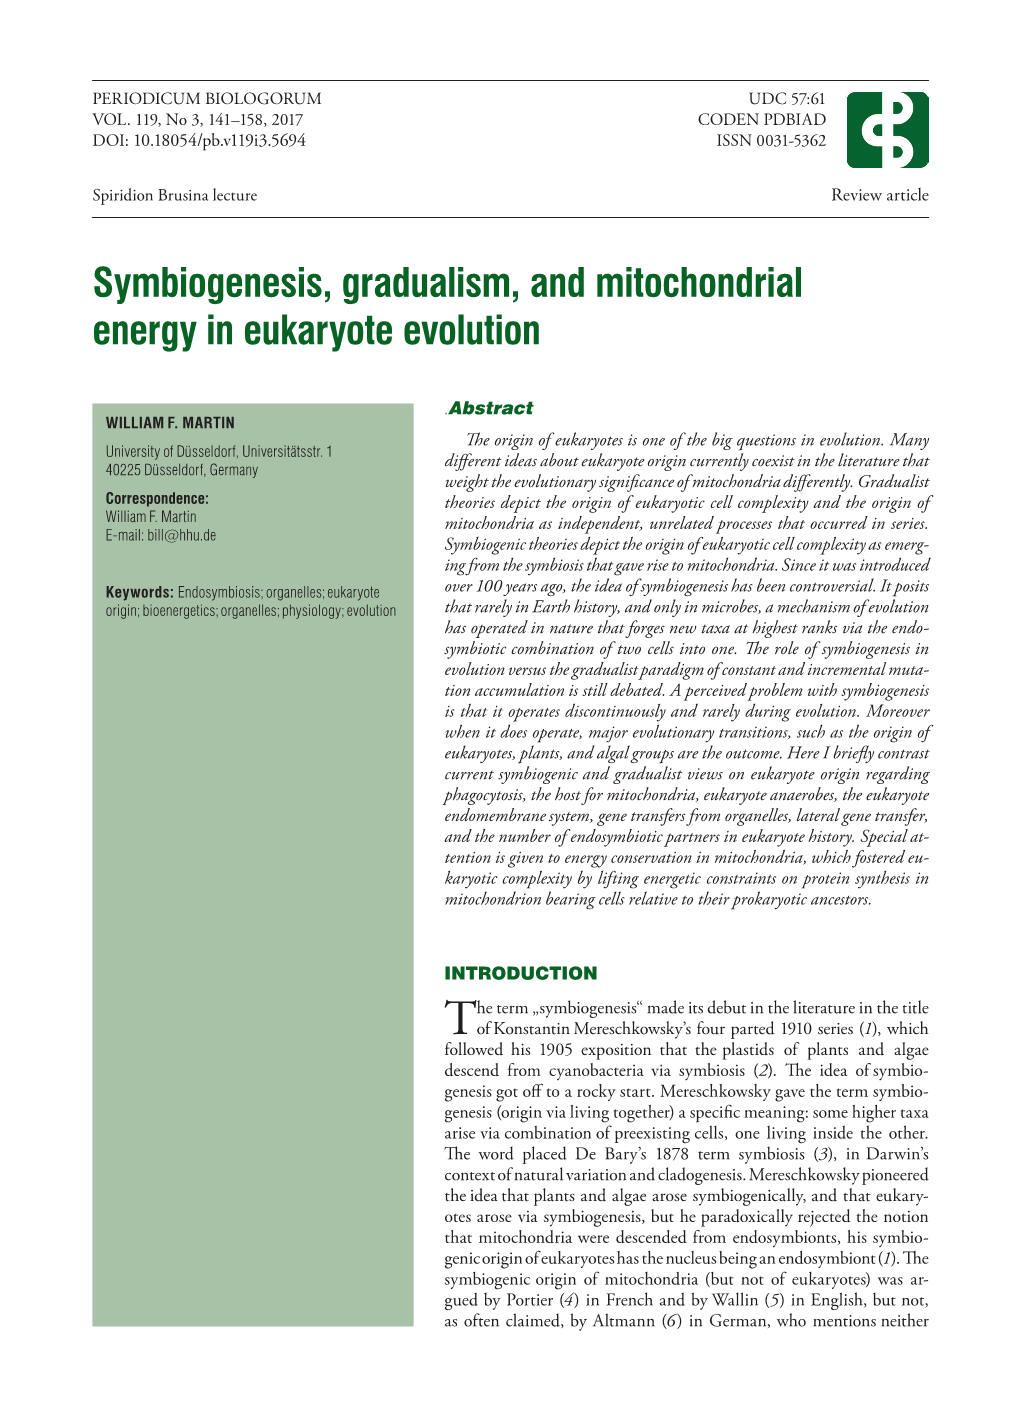 Symbiogenesis, Gradualism, and Mitochondrial Energy in Eukaryote Evolution